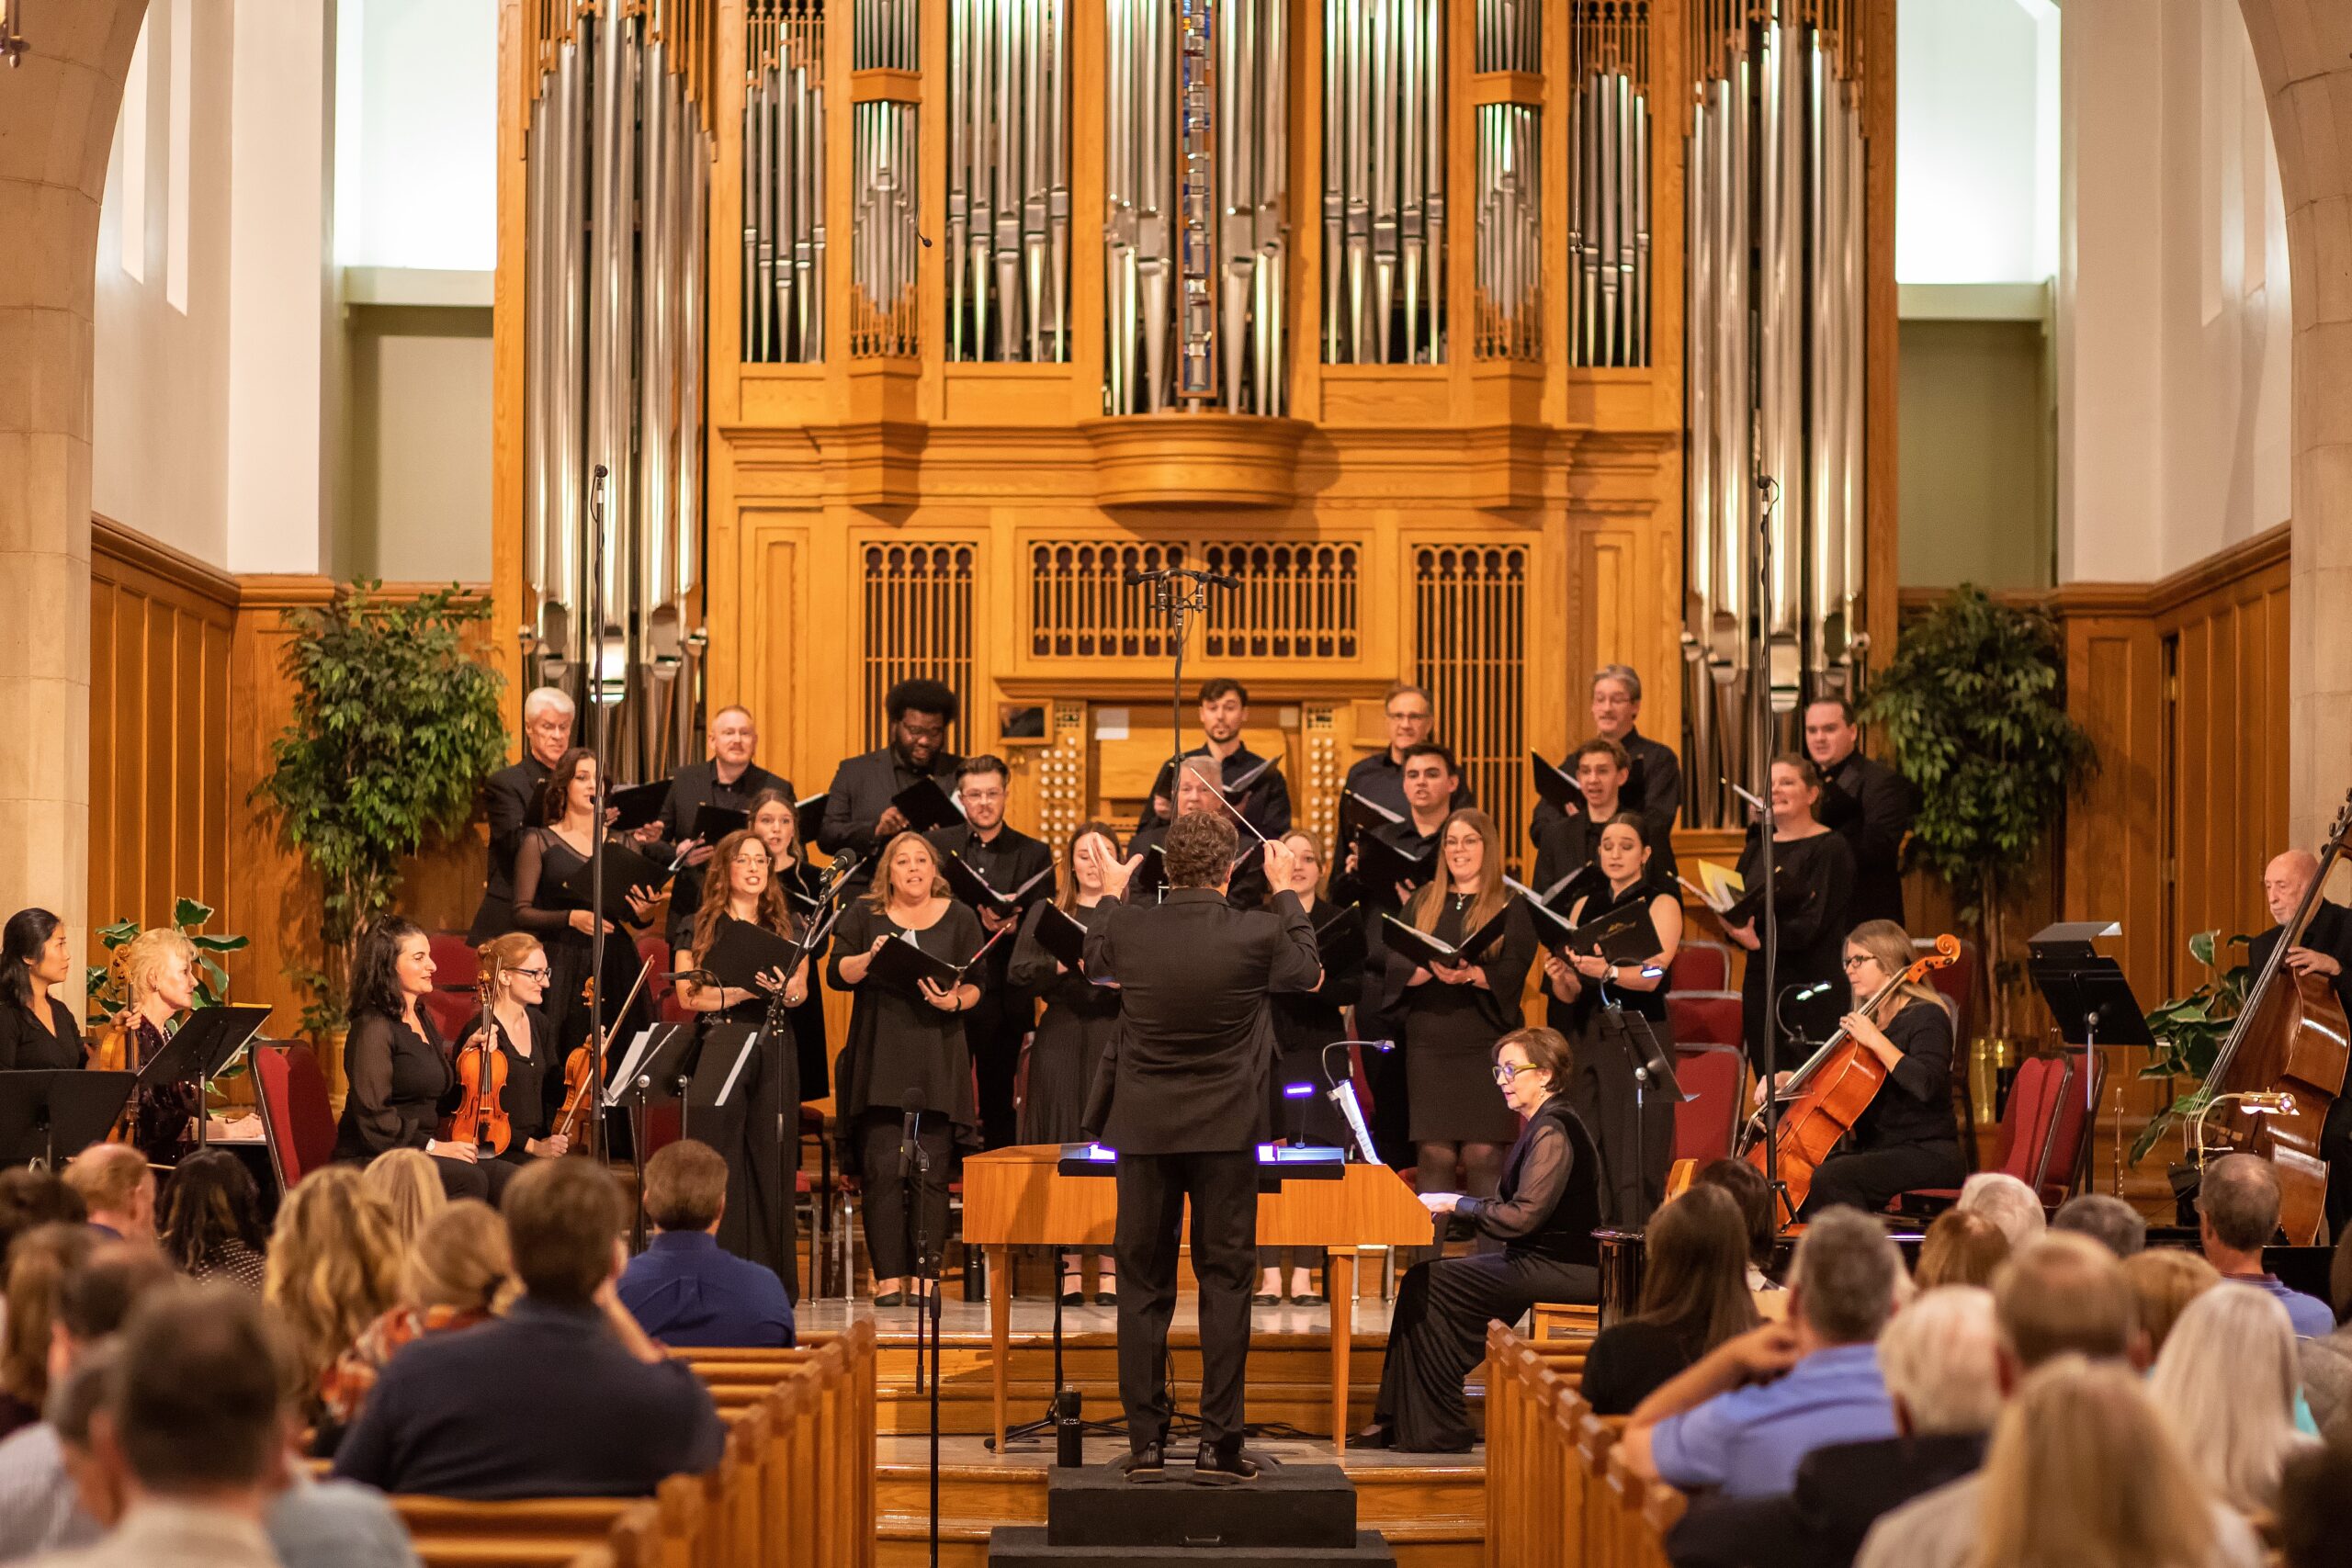 ChoralSong – A Colorado Springs Music Group